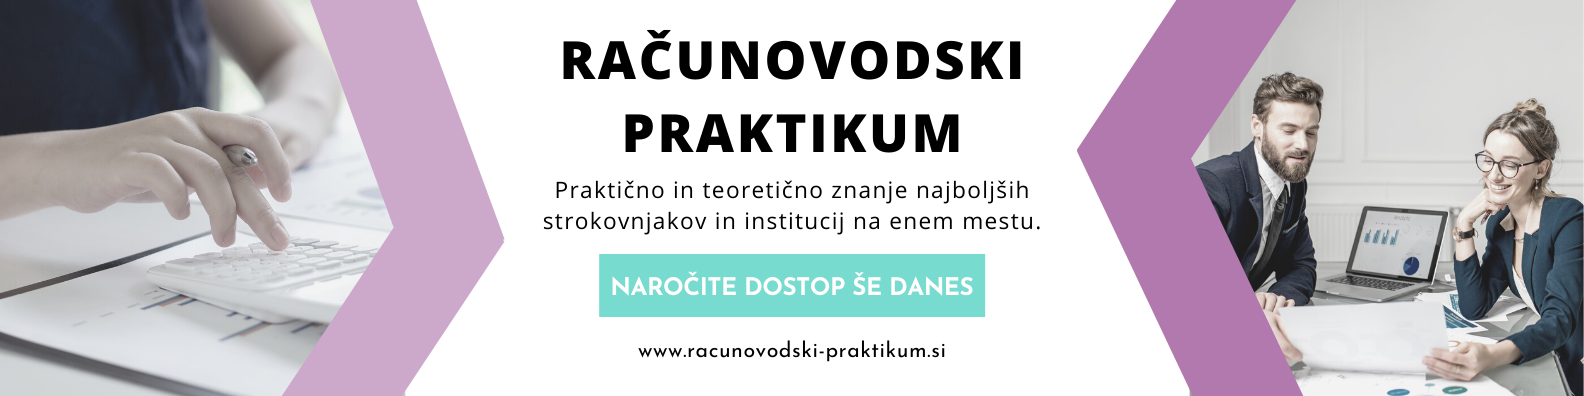 Portal racunovodski-praktikum.si